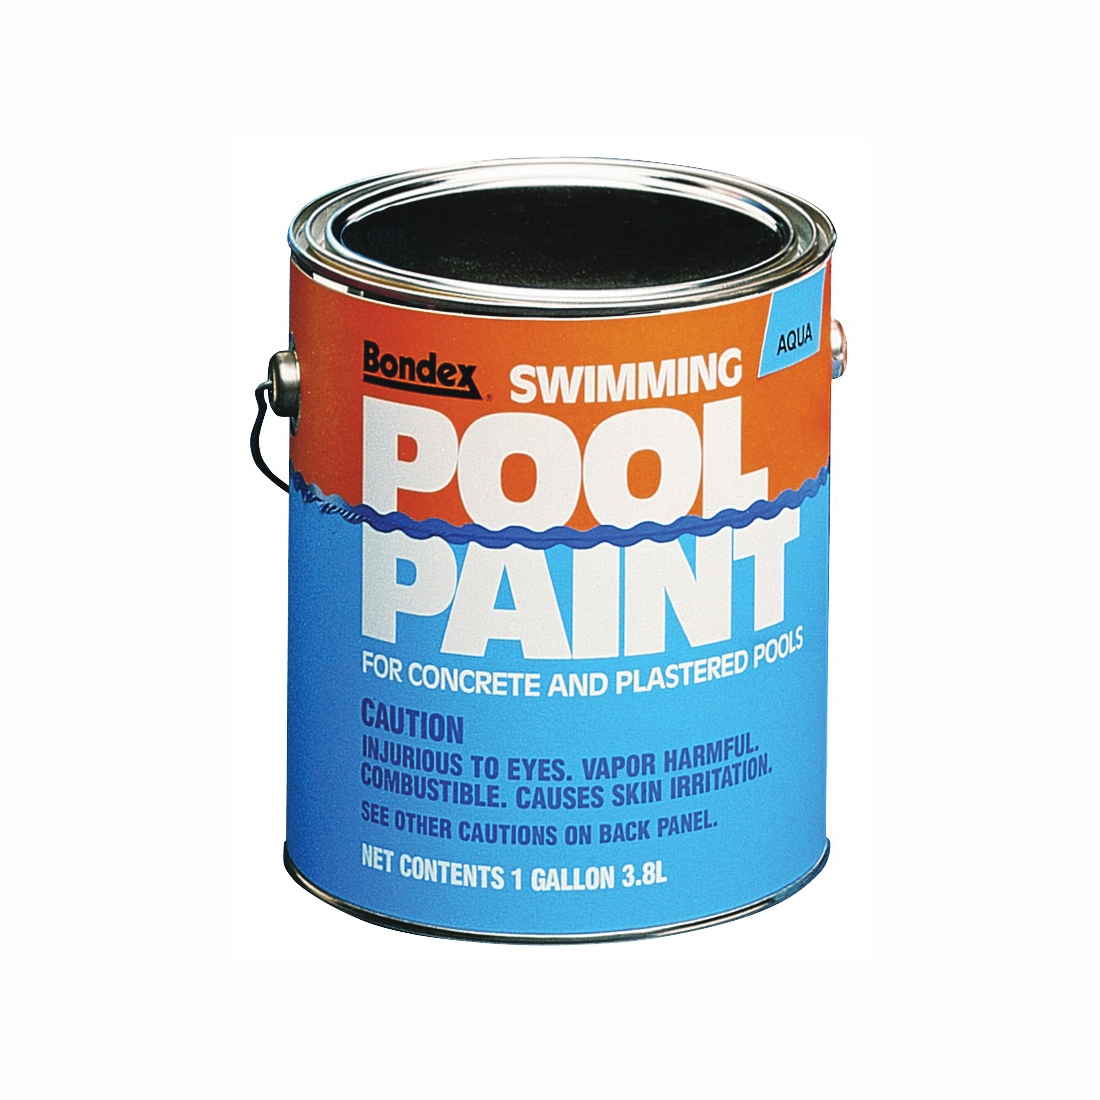 ZINSSER 260539 Swimming Pool Paint, Matte, Blue, 1 gal - 2